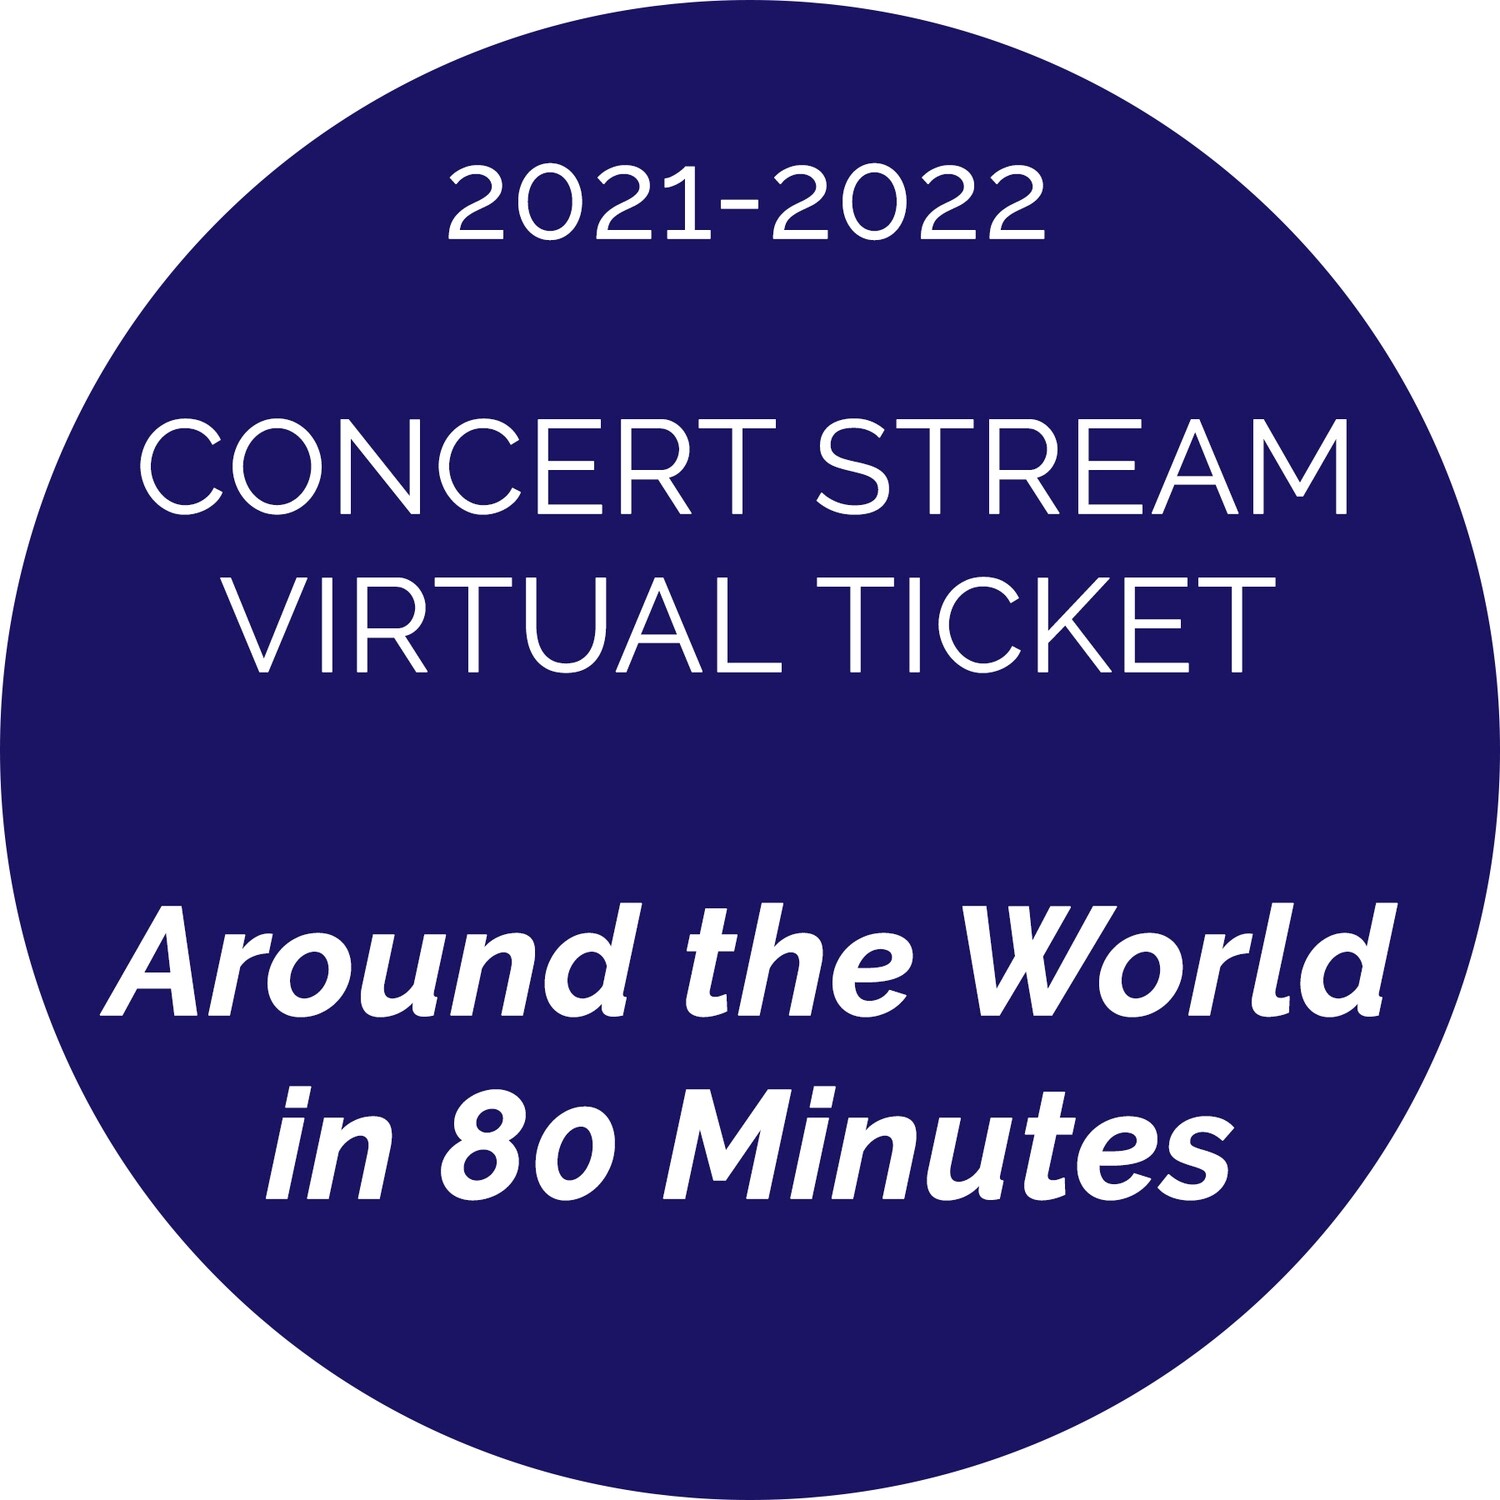 Around the World... Concert Stream Virtual Ticket